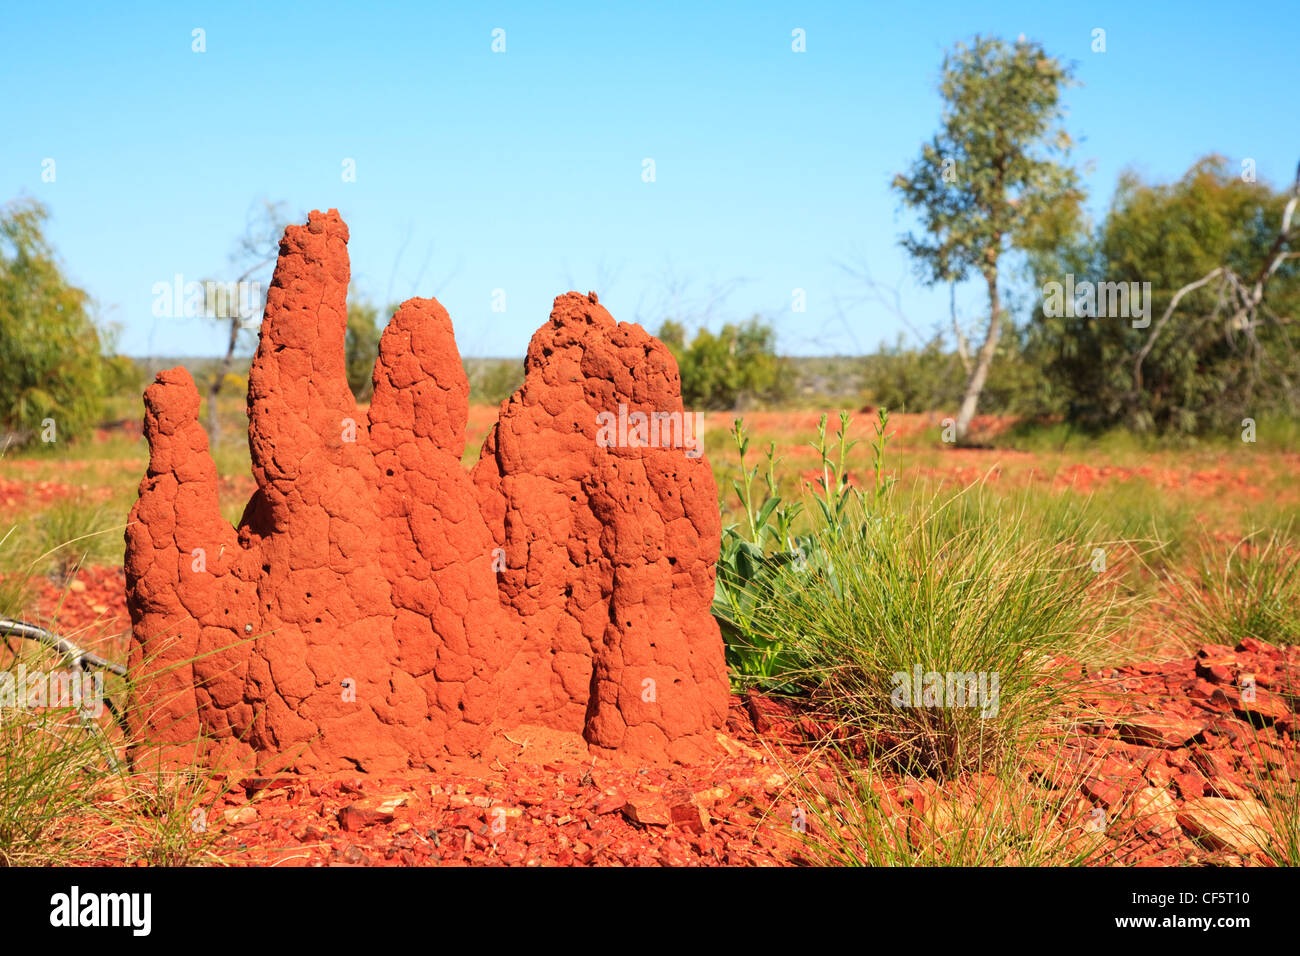 Multi turreted termite mound in outback Western Australia. Stock Photo